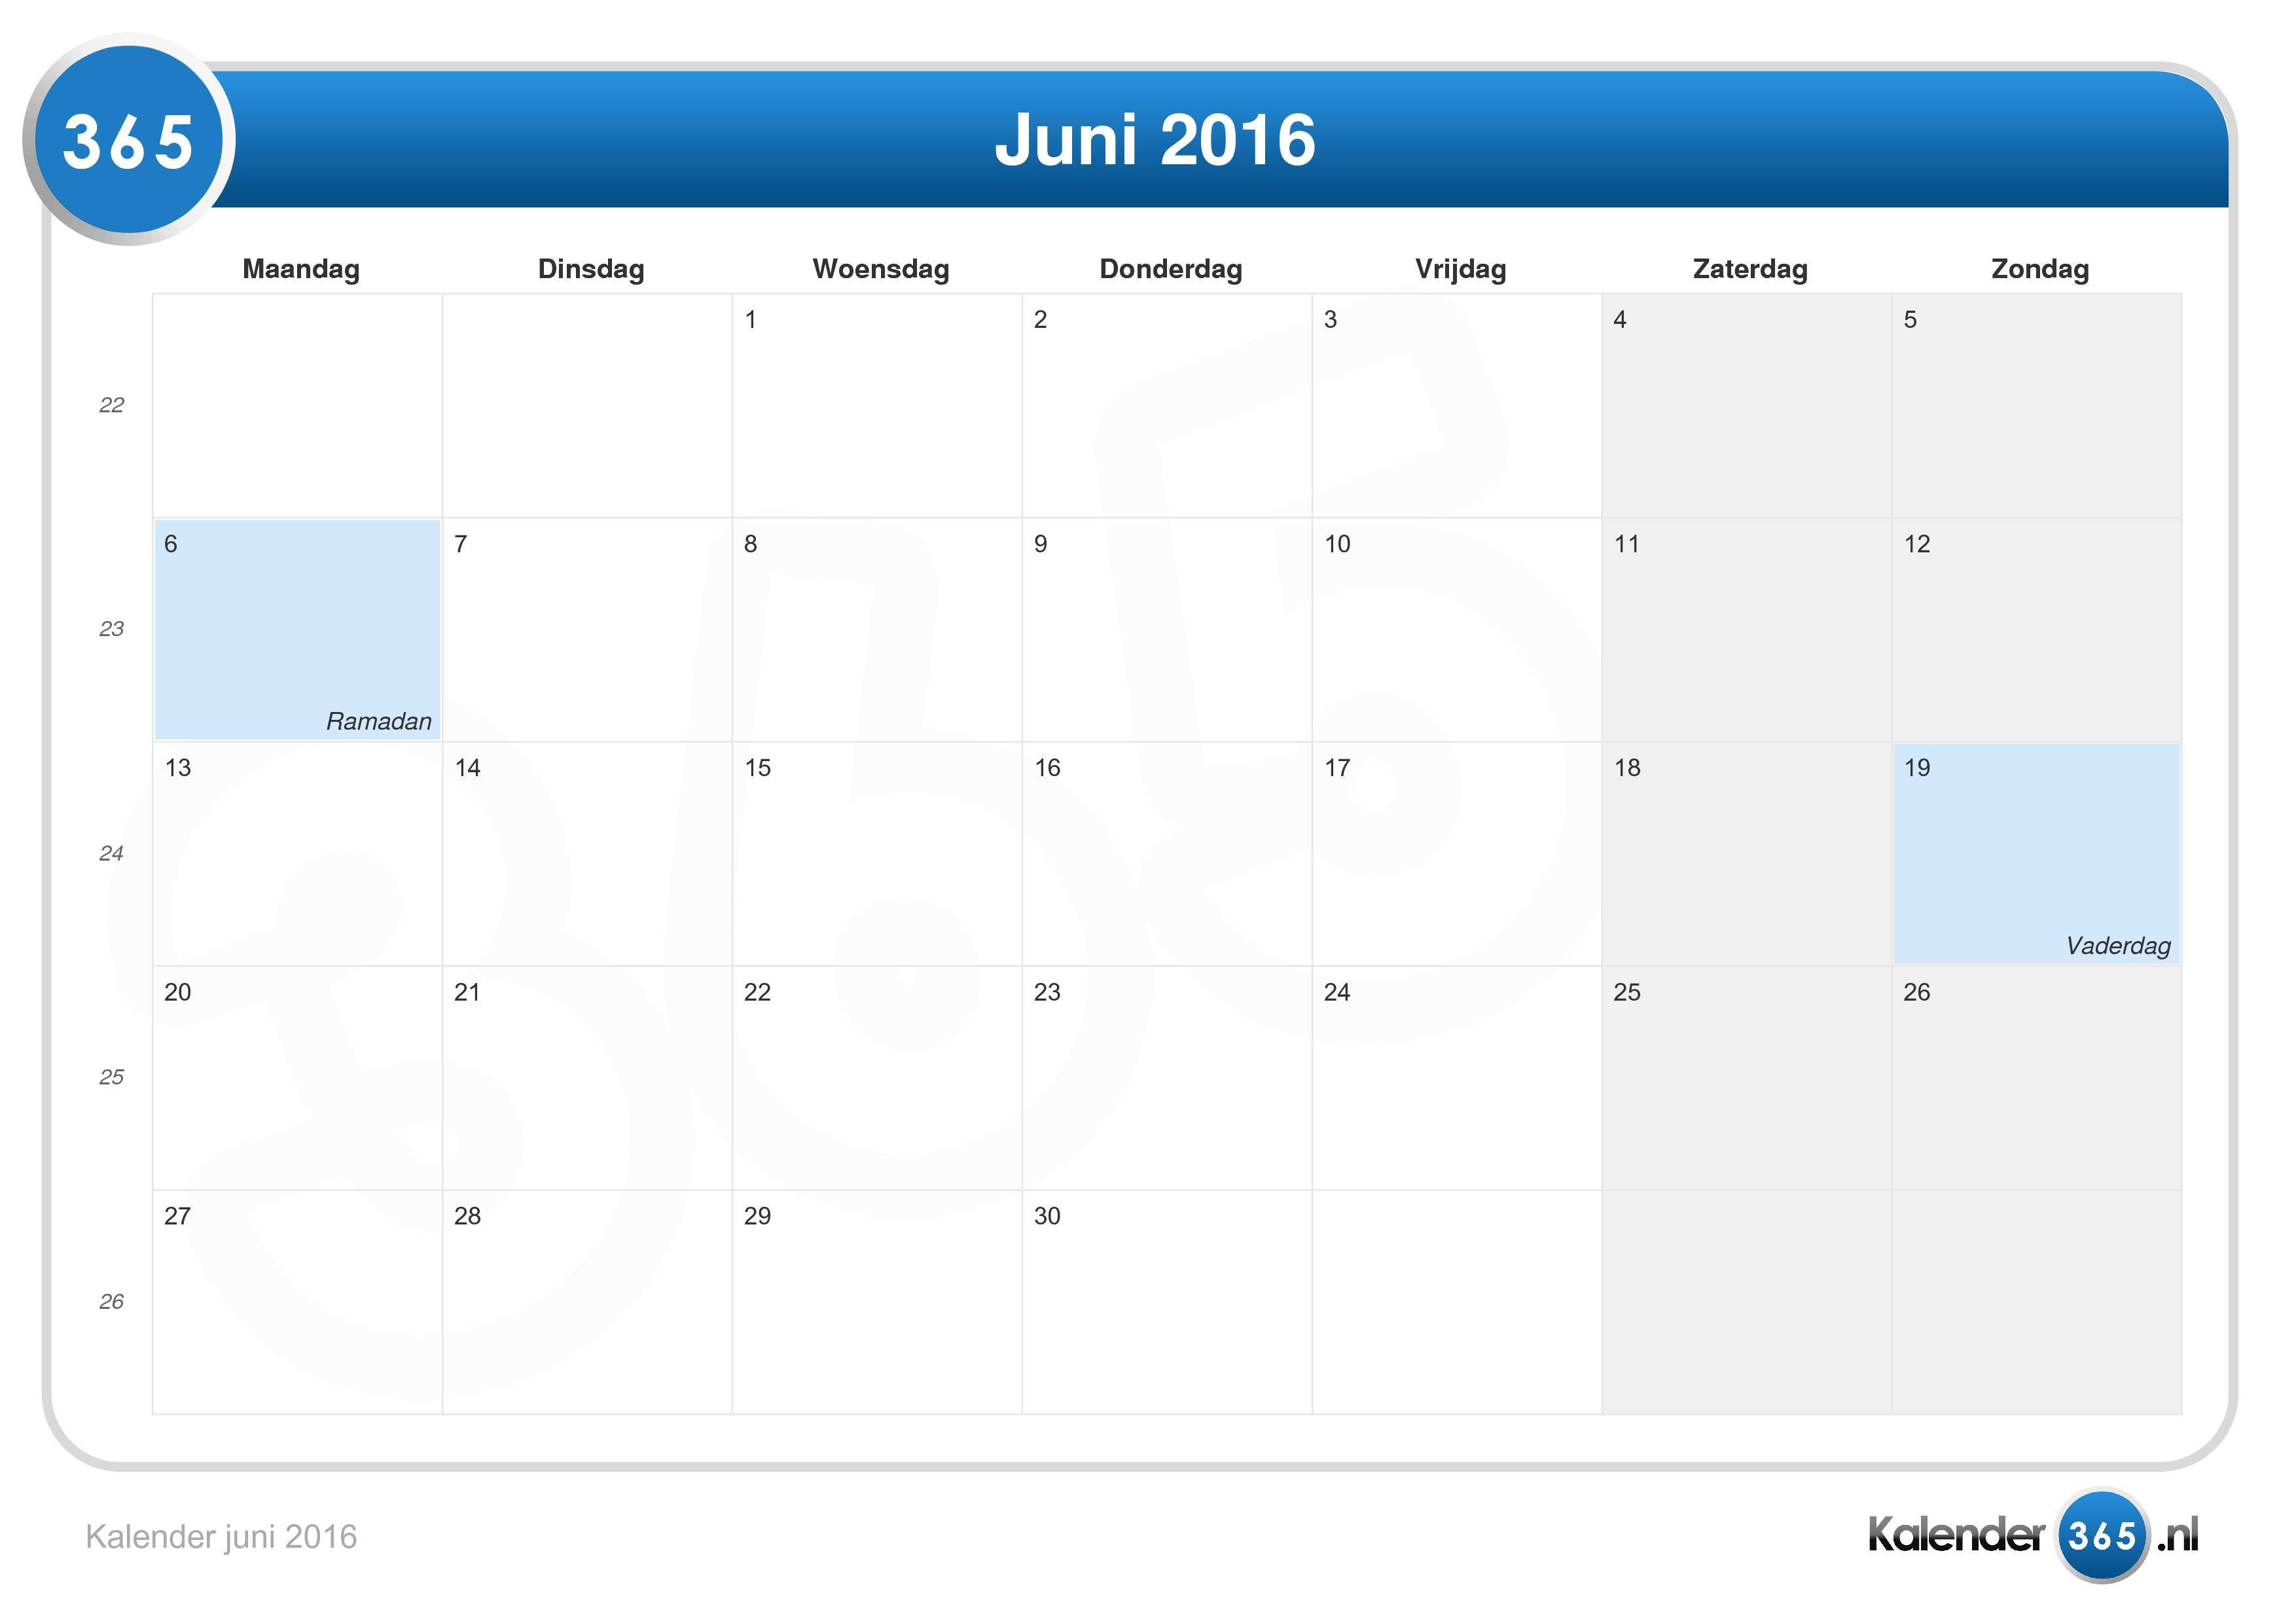 cijfer enthousiast jacht Kalender juni 2016